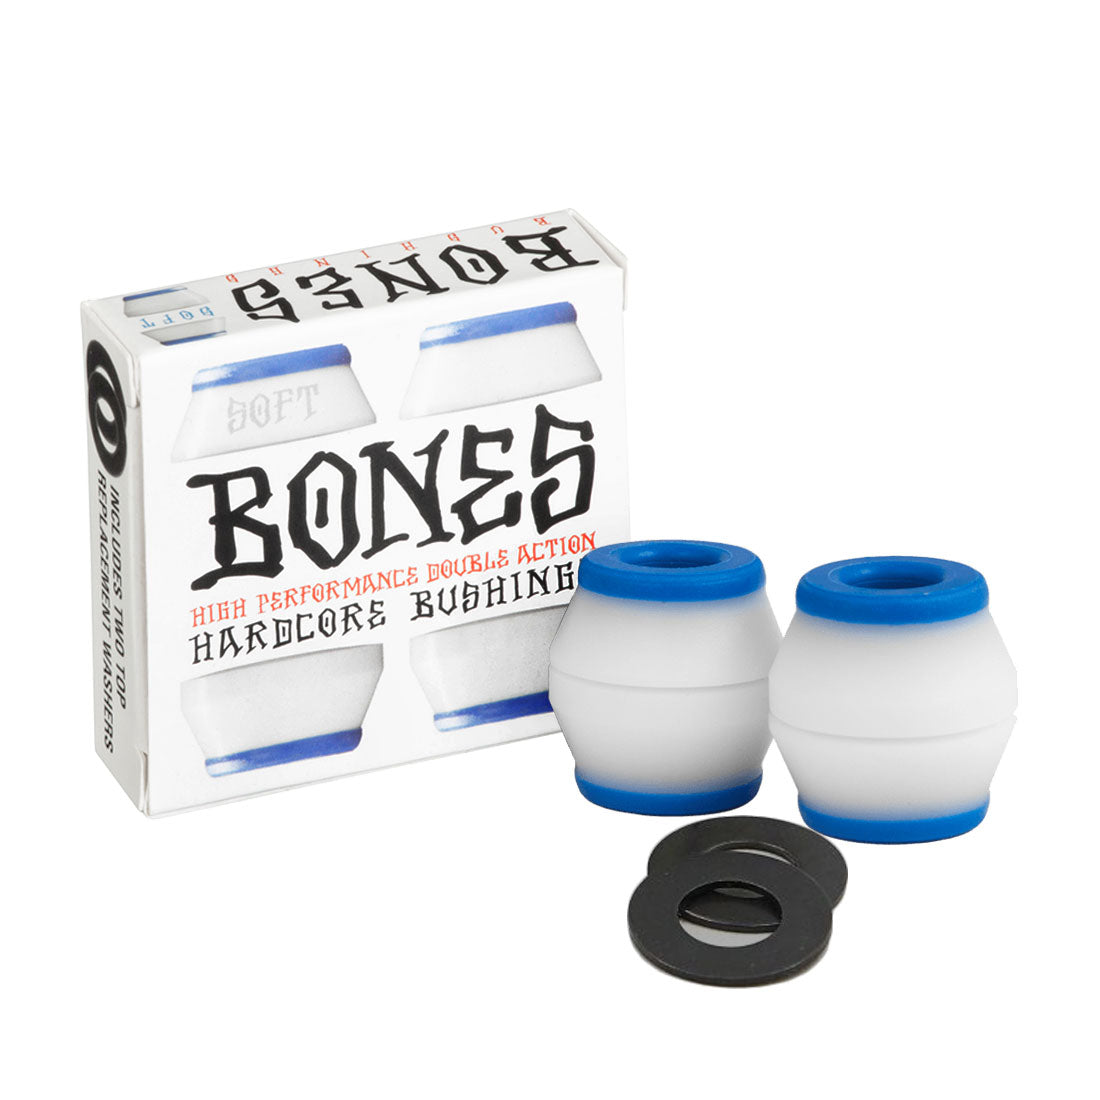 Bones Hardcore Conical Bushings 4pk - White White Soft | 81A Skateboard Hardware and Parts